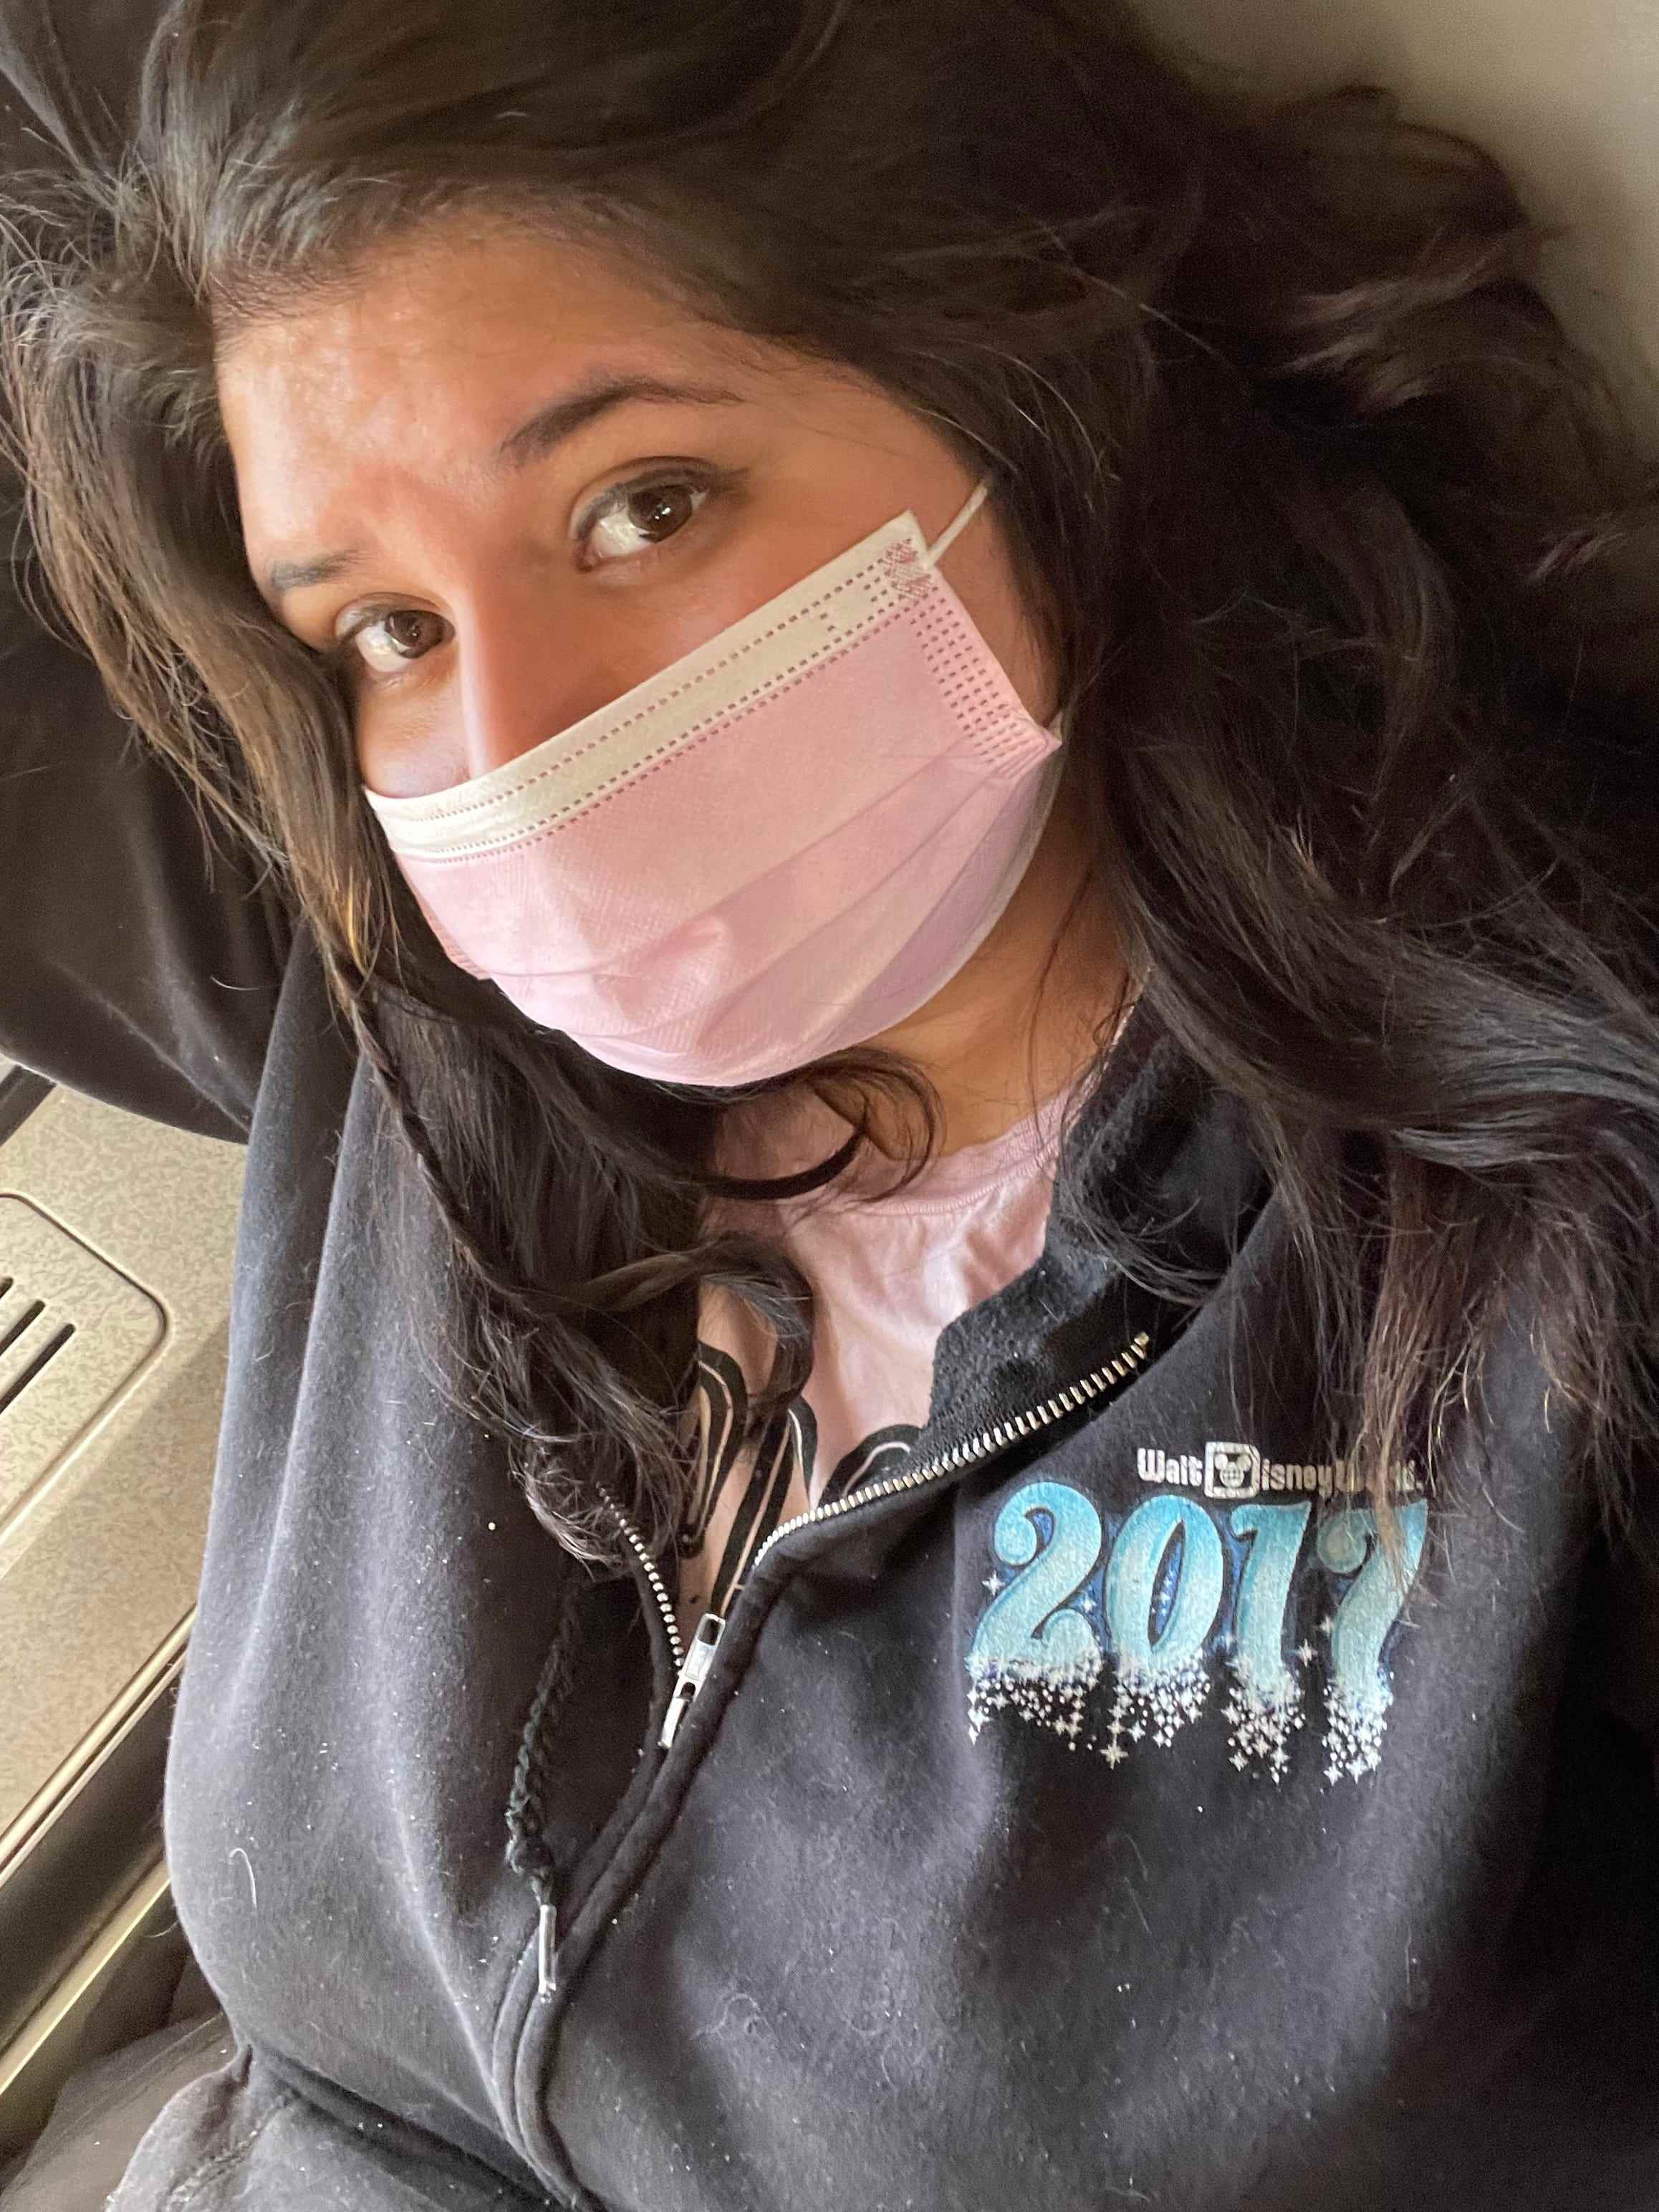 Ashley Leung auf Amtrak mit rosa Maske